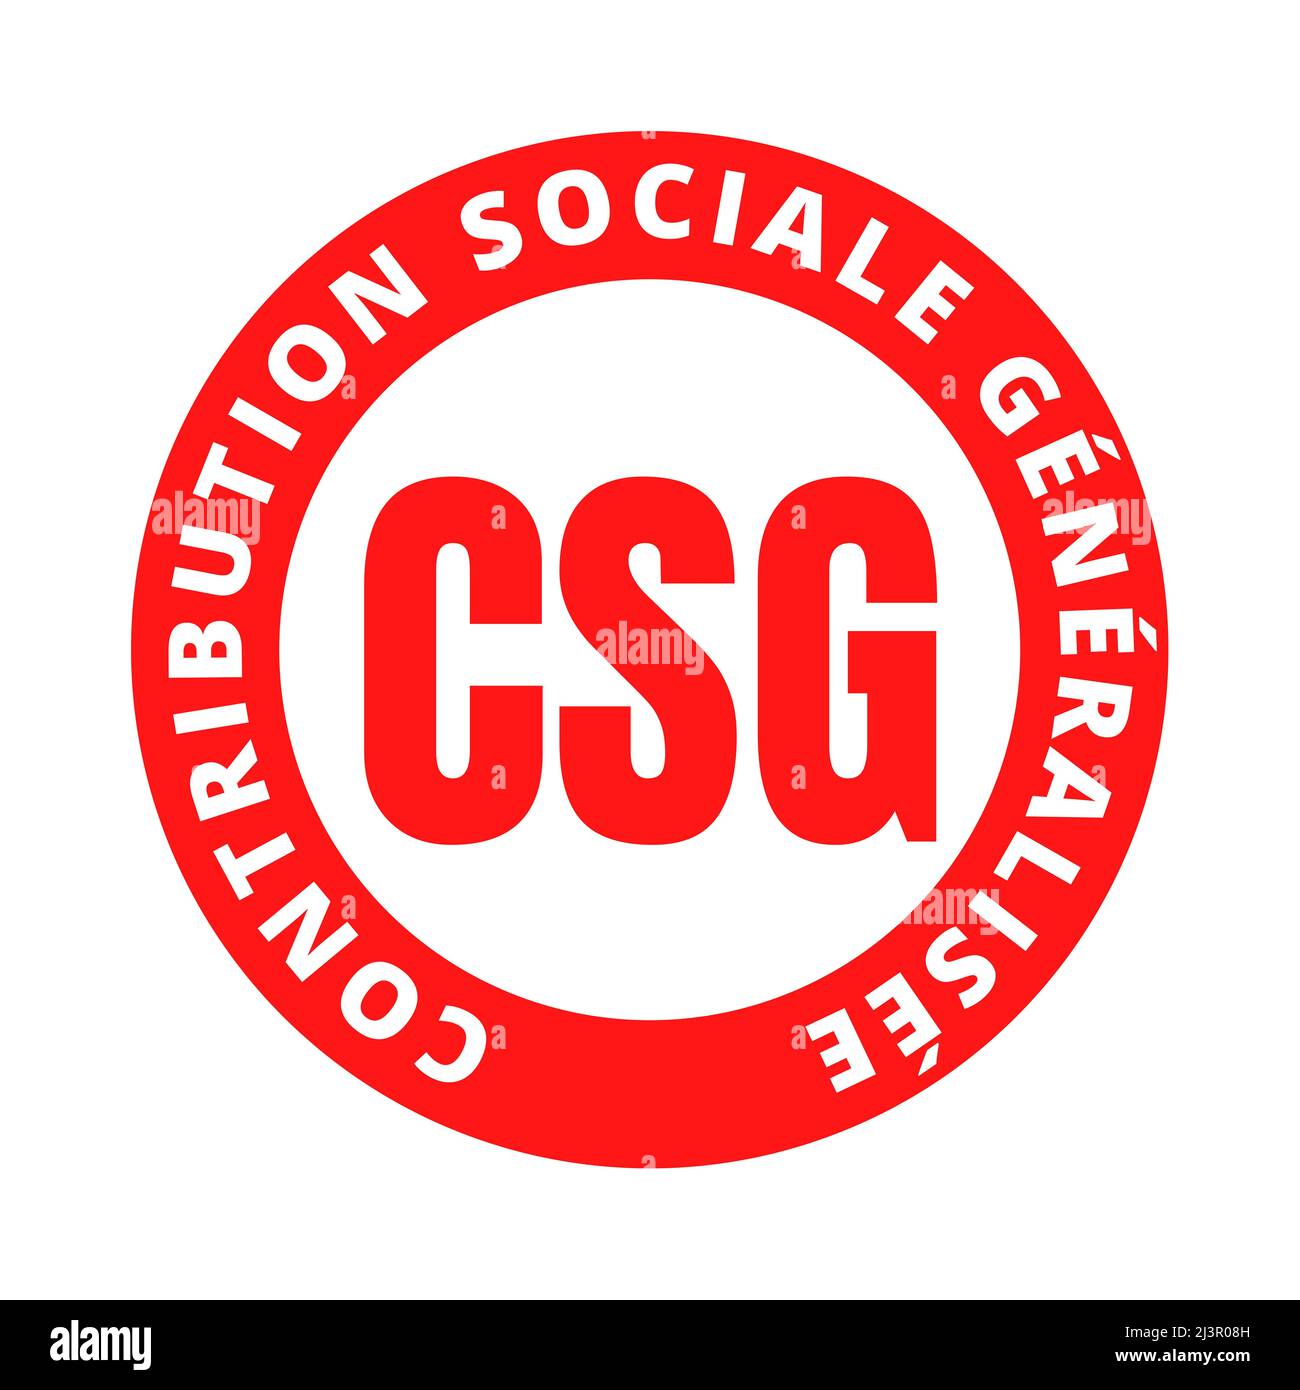 Generalized social contribution symbol icon called contribution sociale generalisee in french language Stock Photo